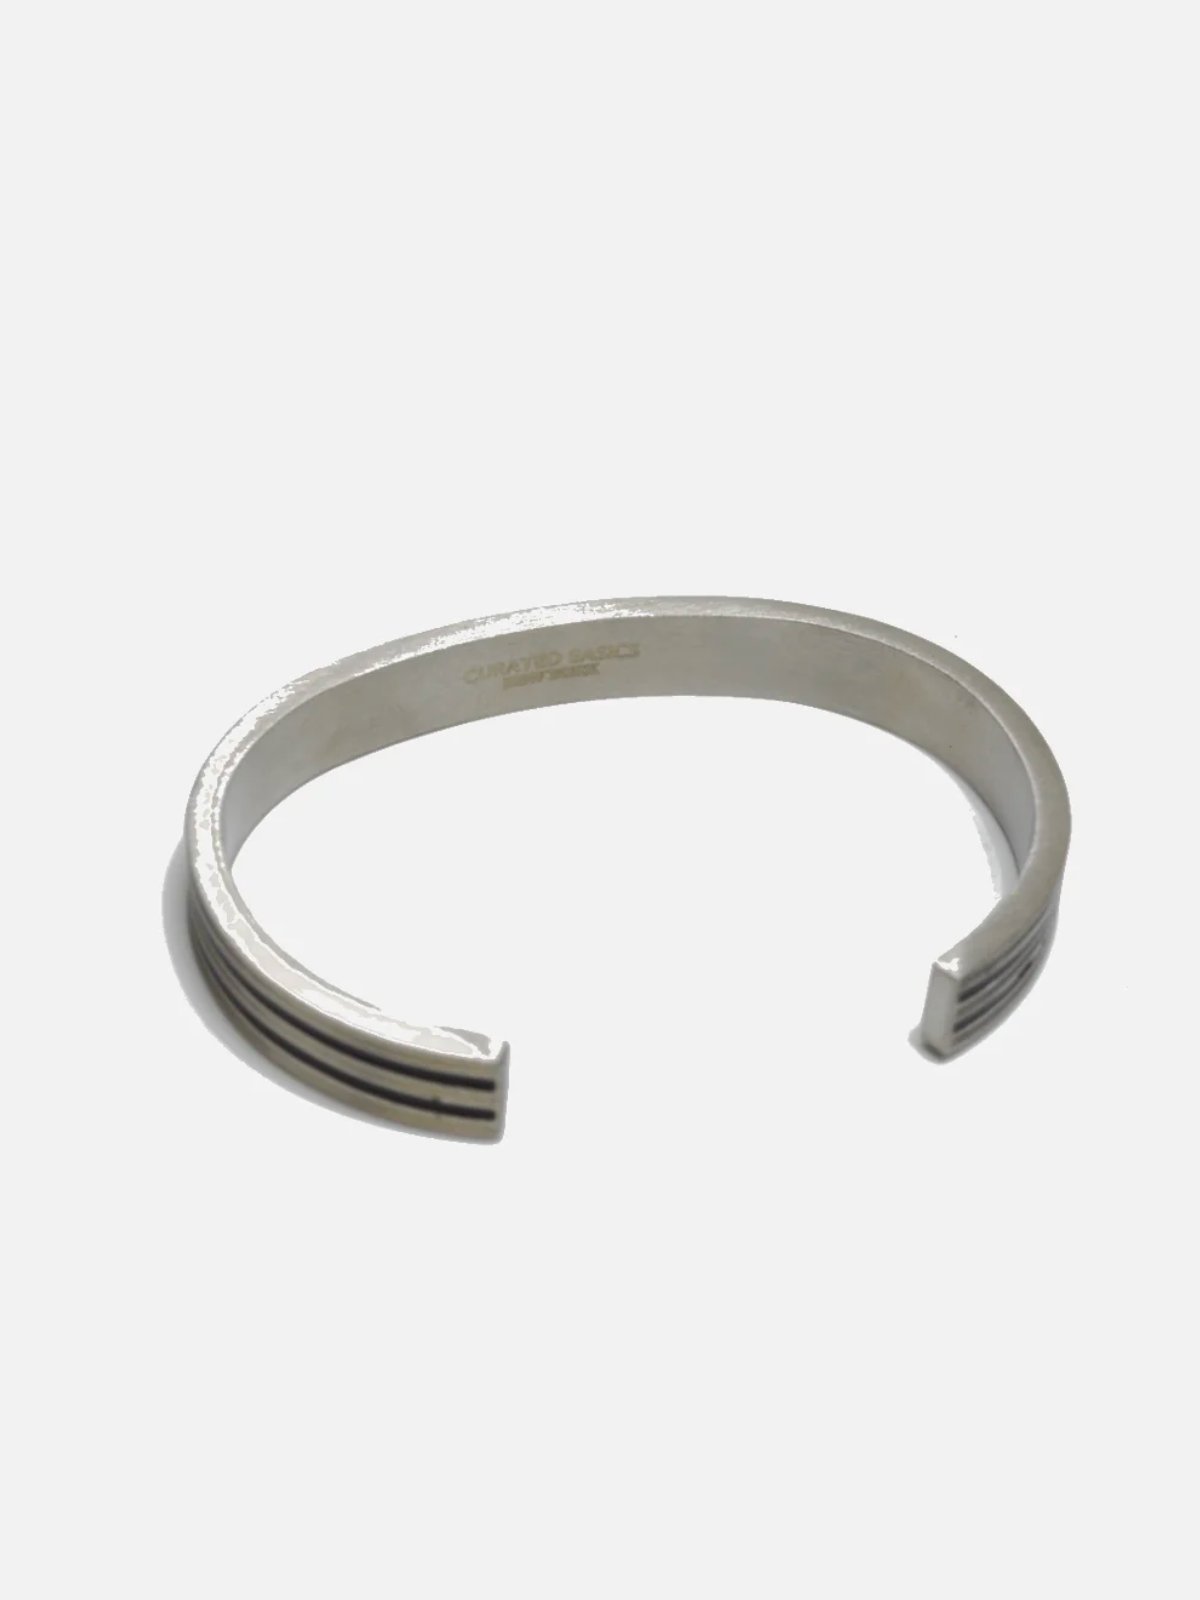 curated basics multi-striped steel cuff bracelet black silver kempt athens ga georgia men's clothing store jewelry